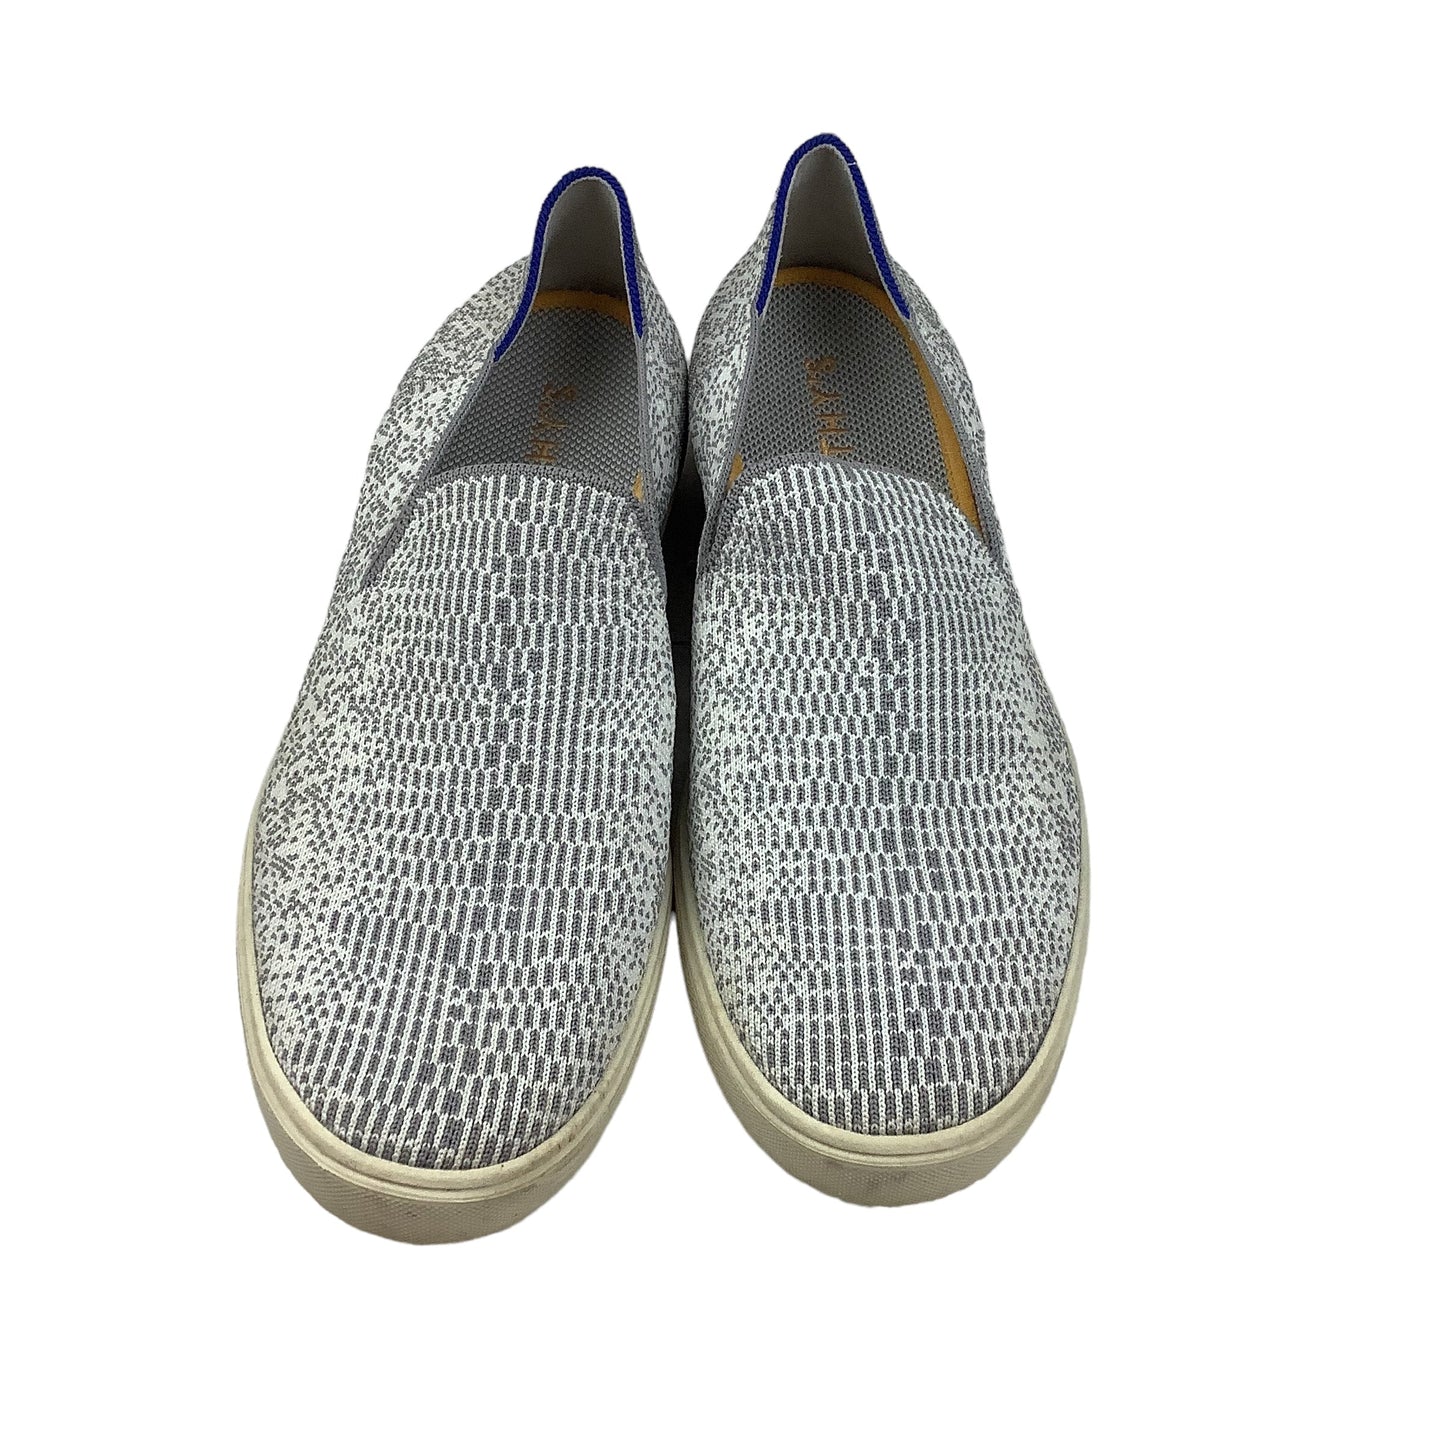 Grey Shoes Designer Rothys, Size 9.5